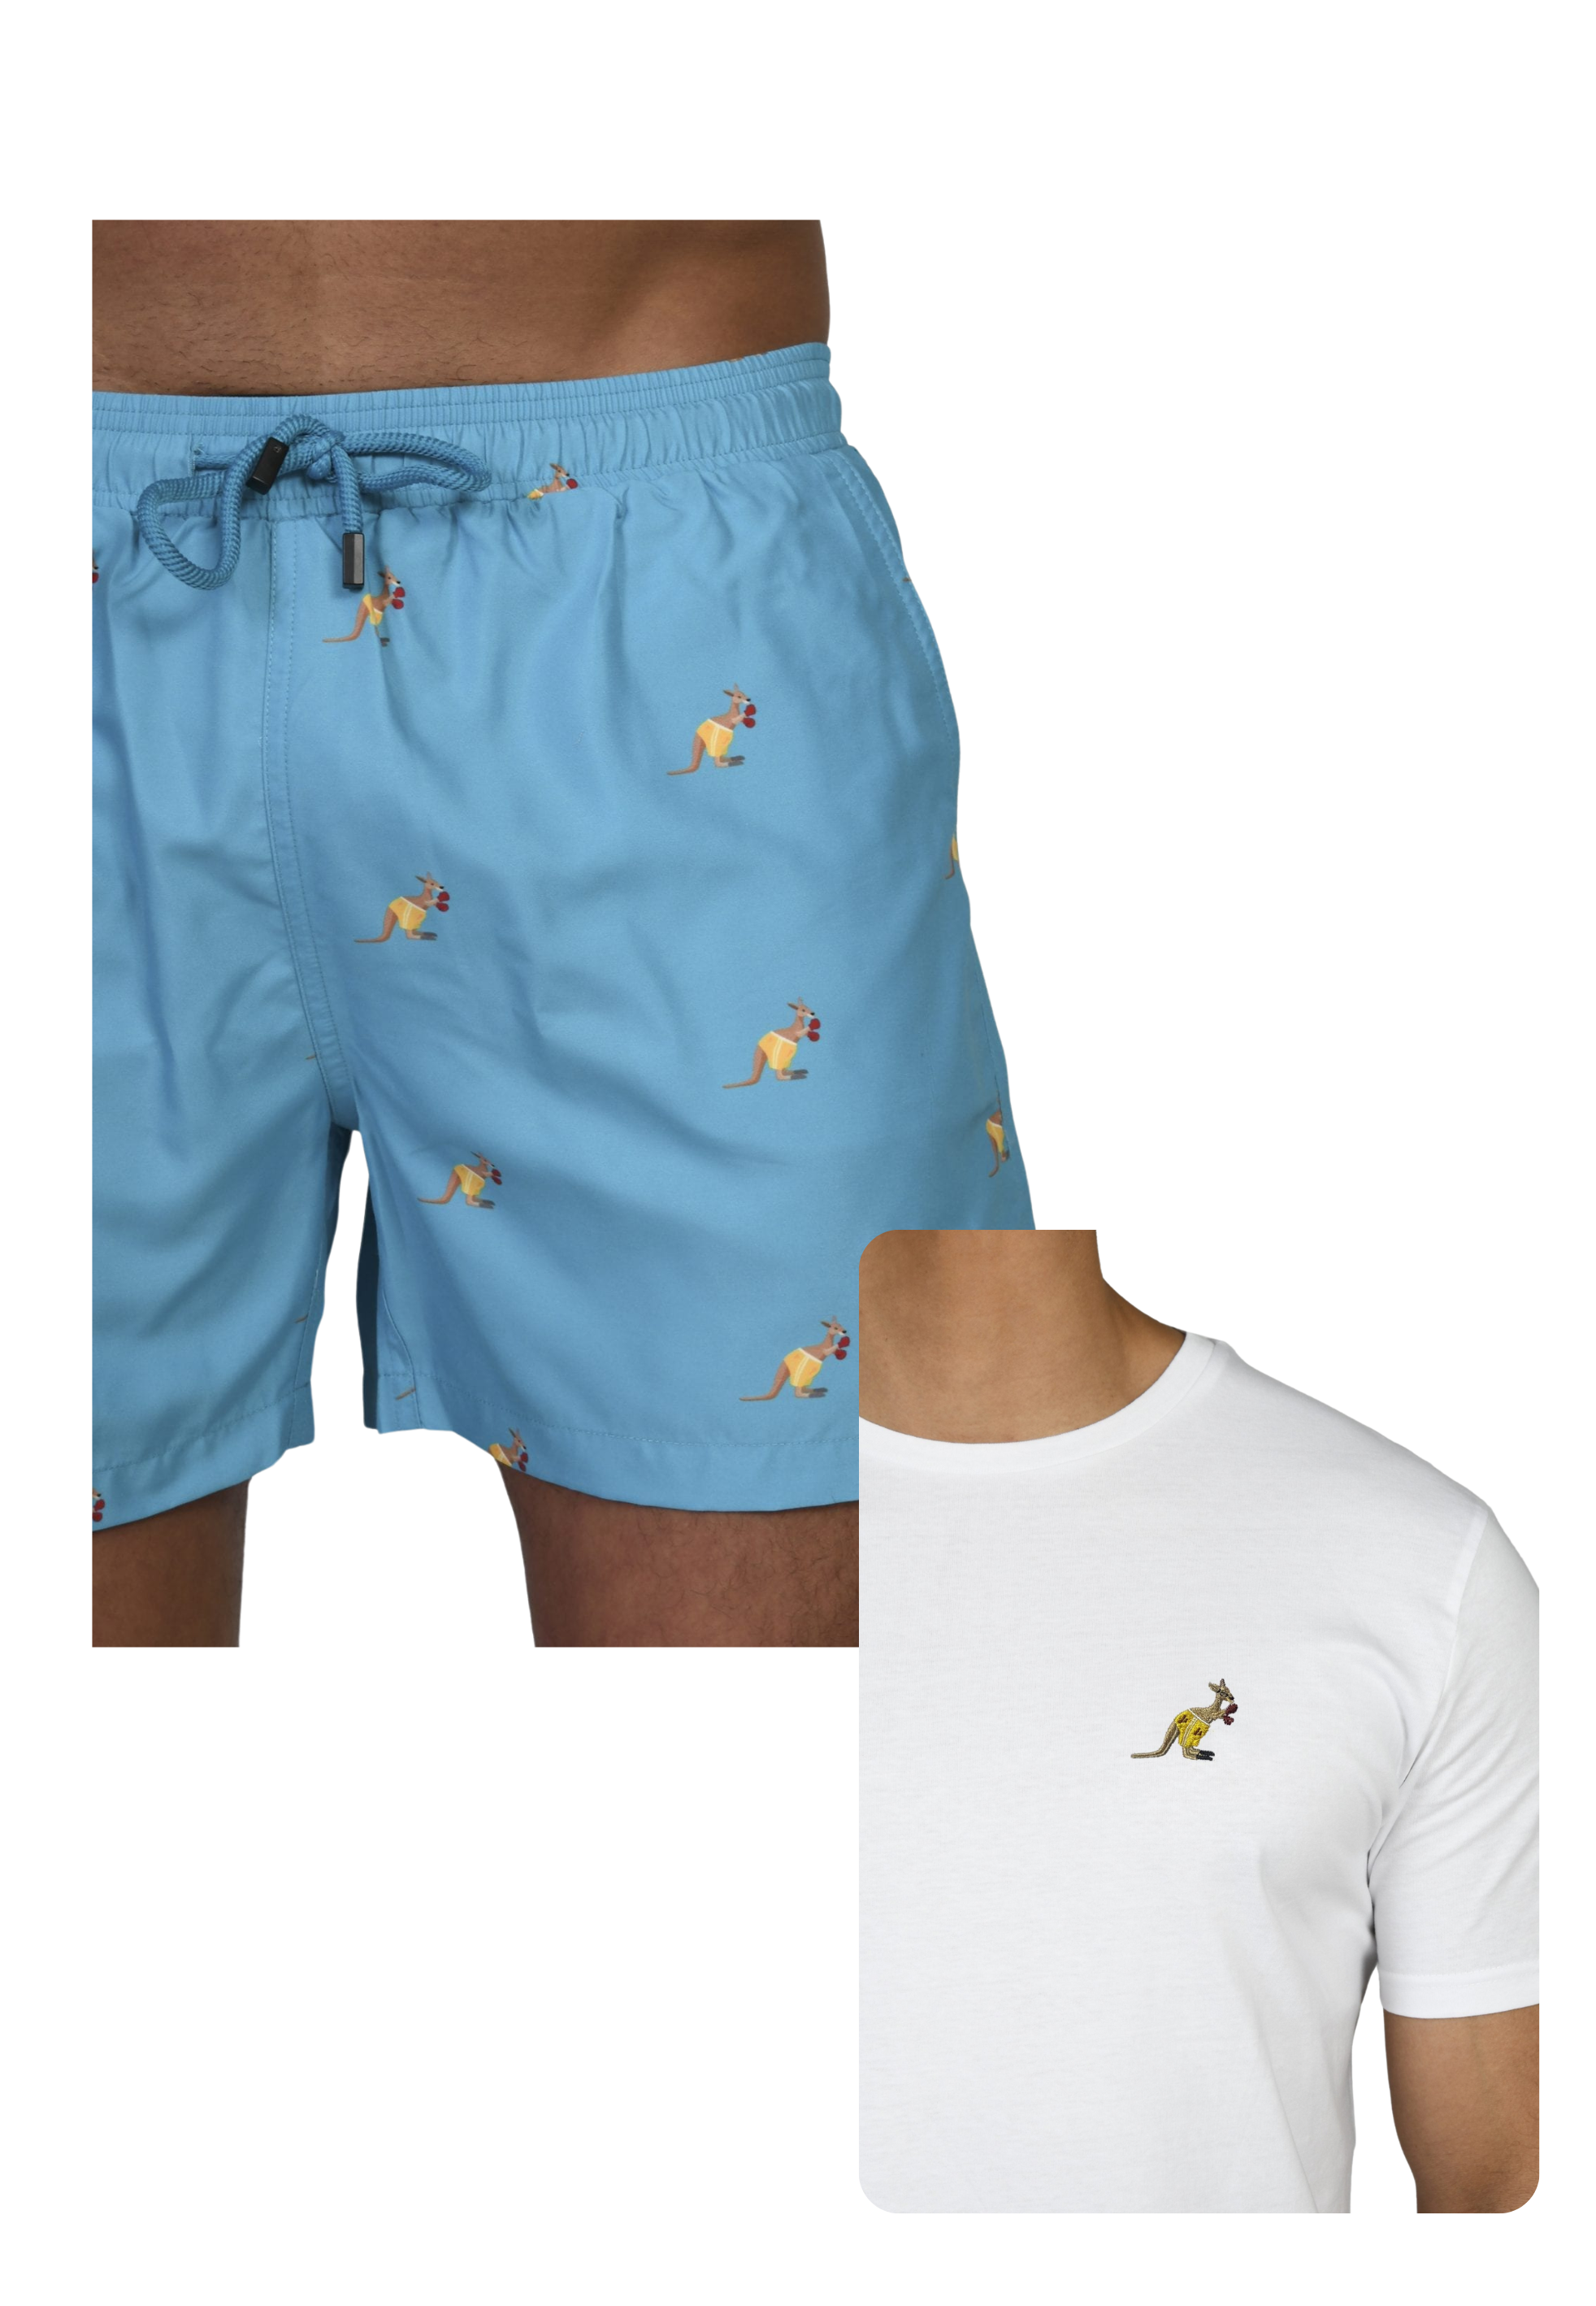 Kangaroo Swim Trunks & T-shirt Bundle